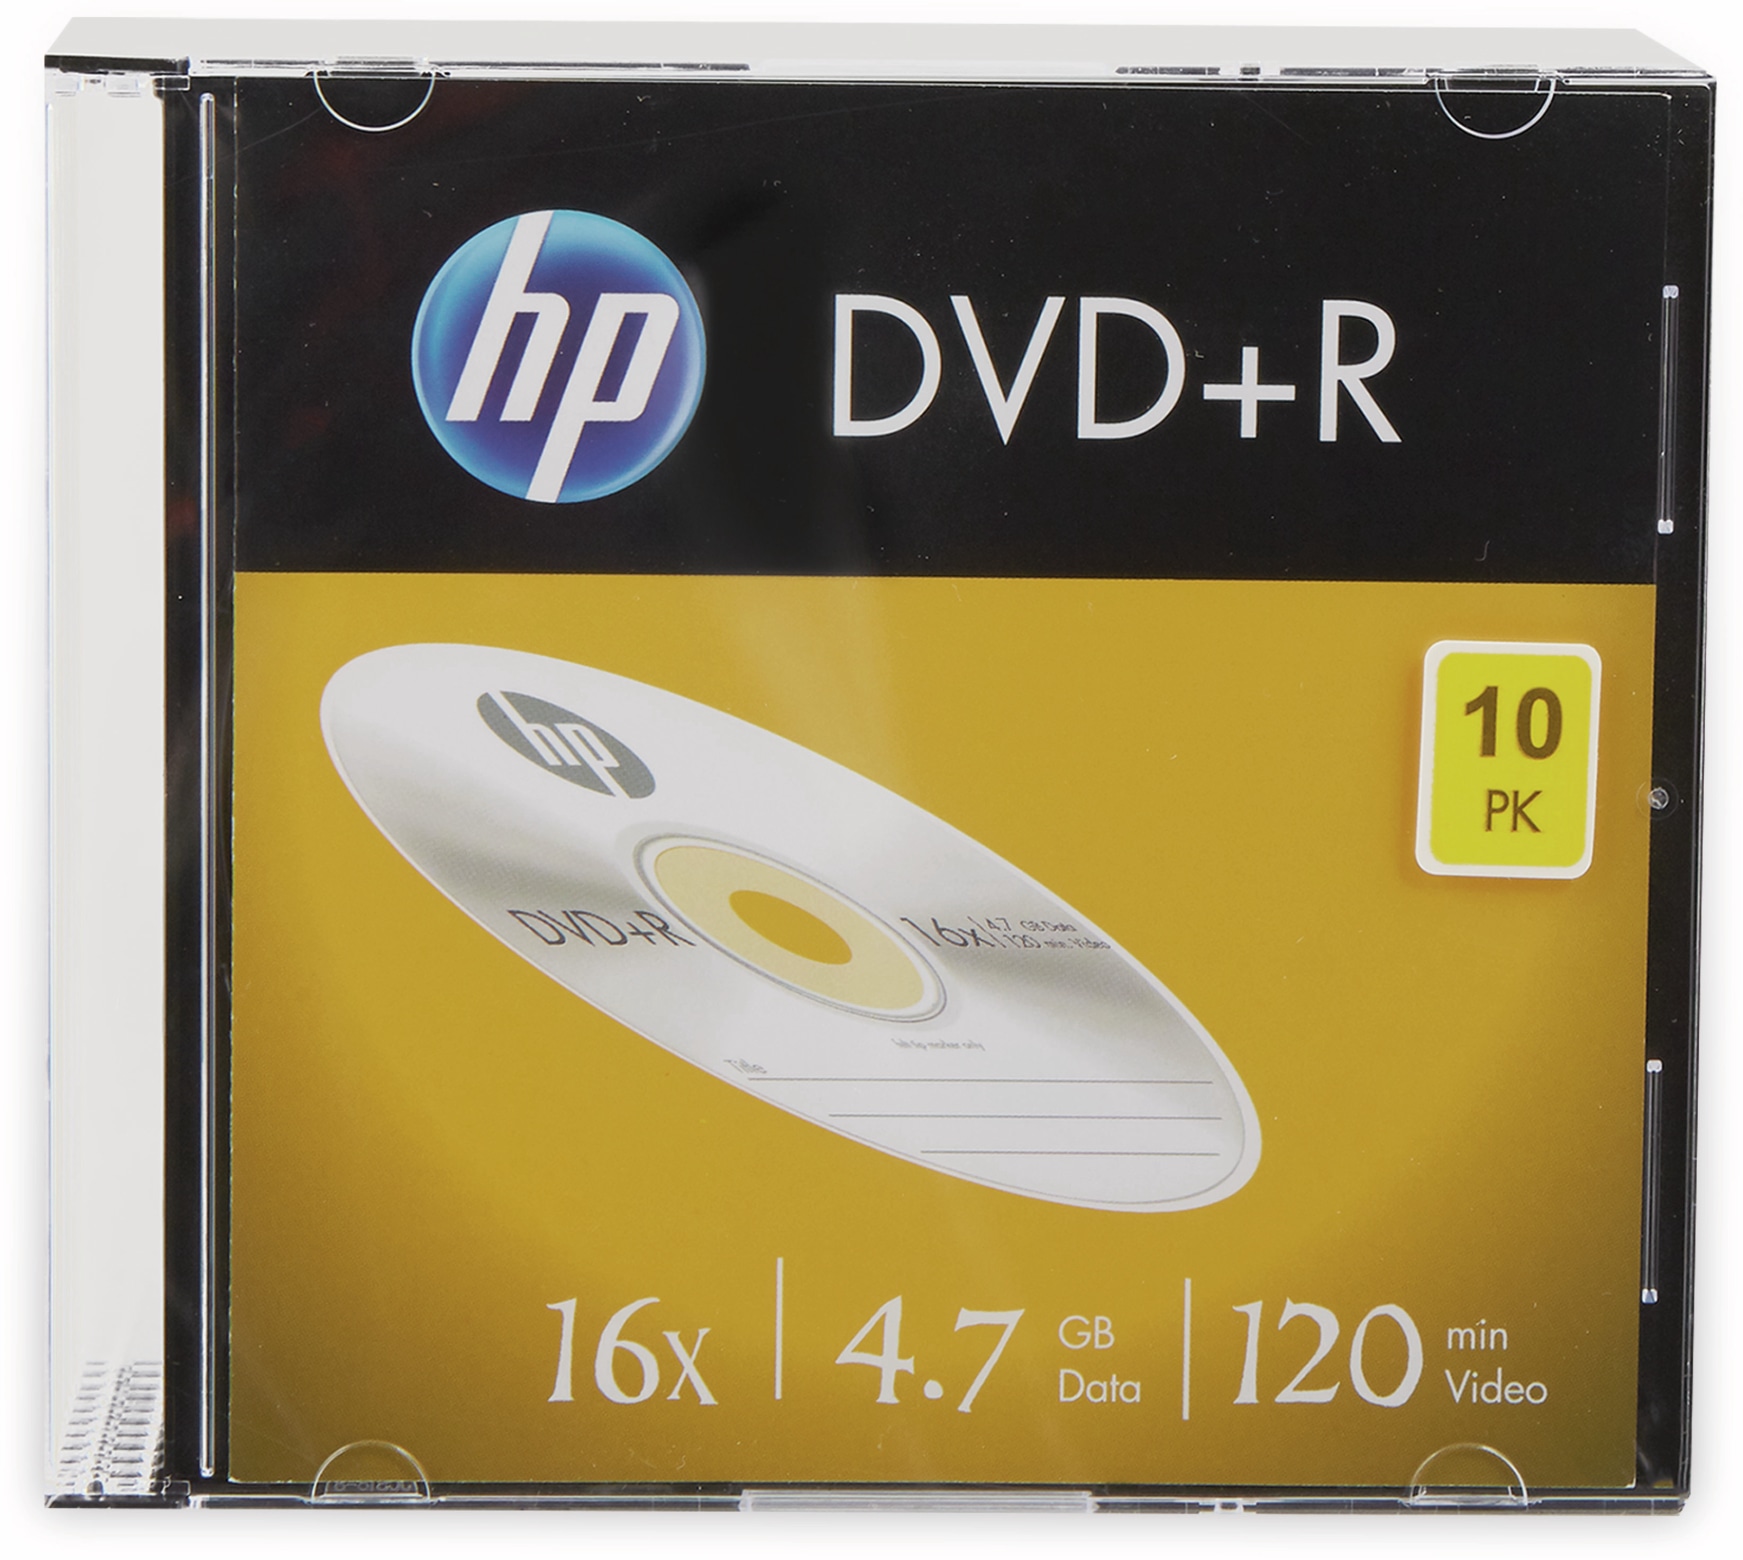 HP DVD+R 4.7GB, 120Min, 16x, Slimcase, 10 CDs